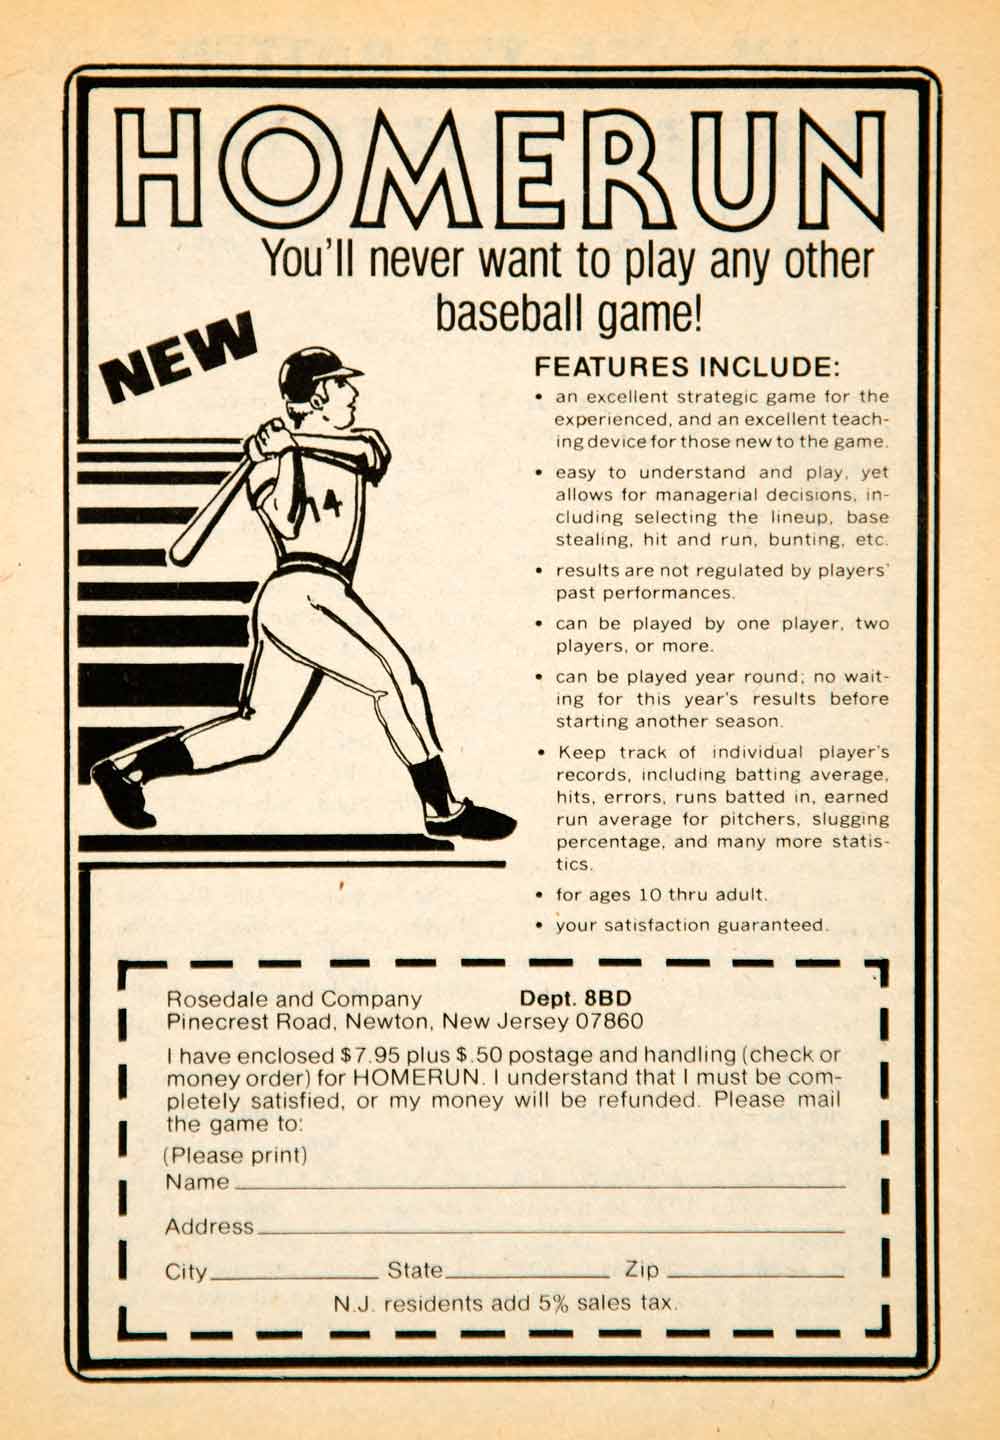 1978 Ad Home Run Baseball Sports Board Game Toy Rosedale Pinecrest Rd YBD1